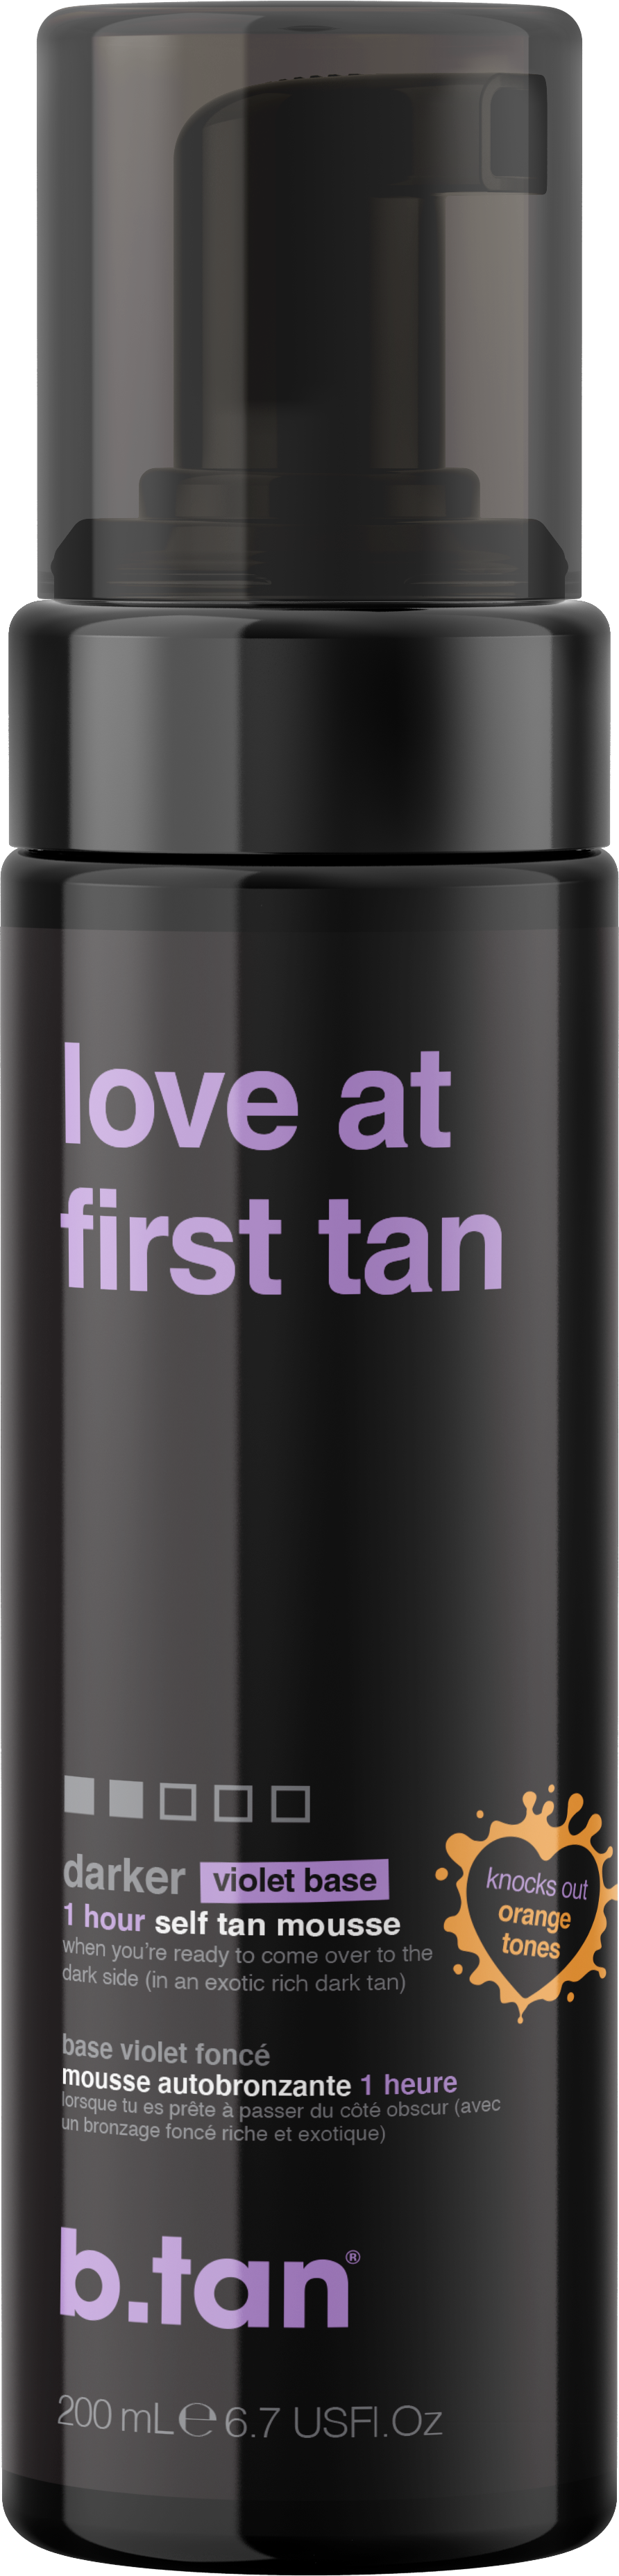 BTAN love at first tan  self tan mousse | 200ml